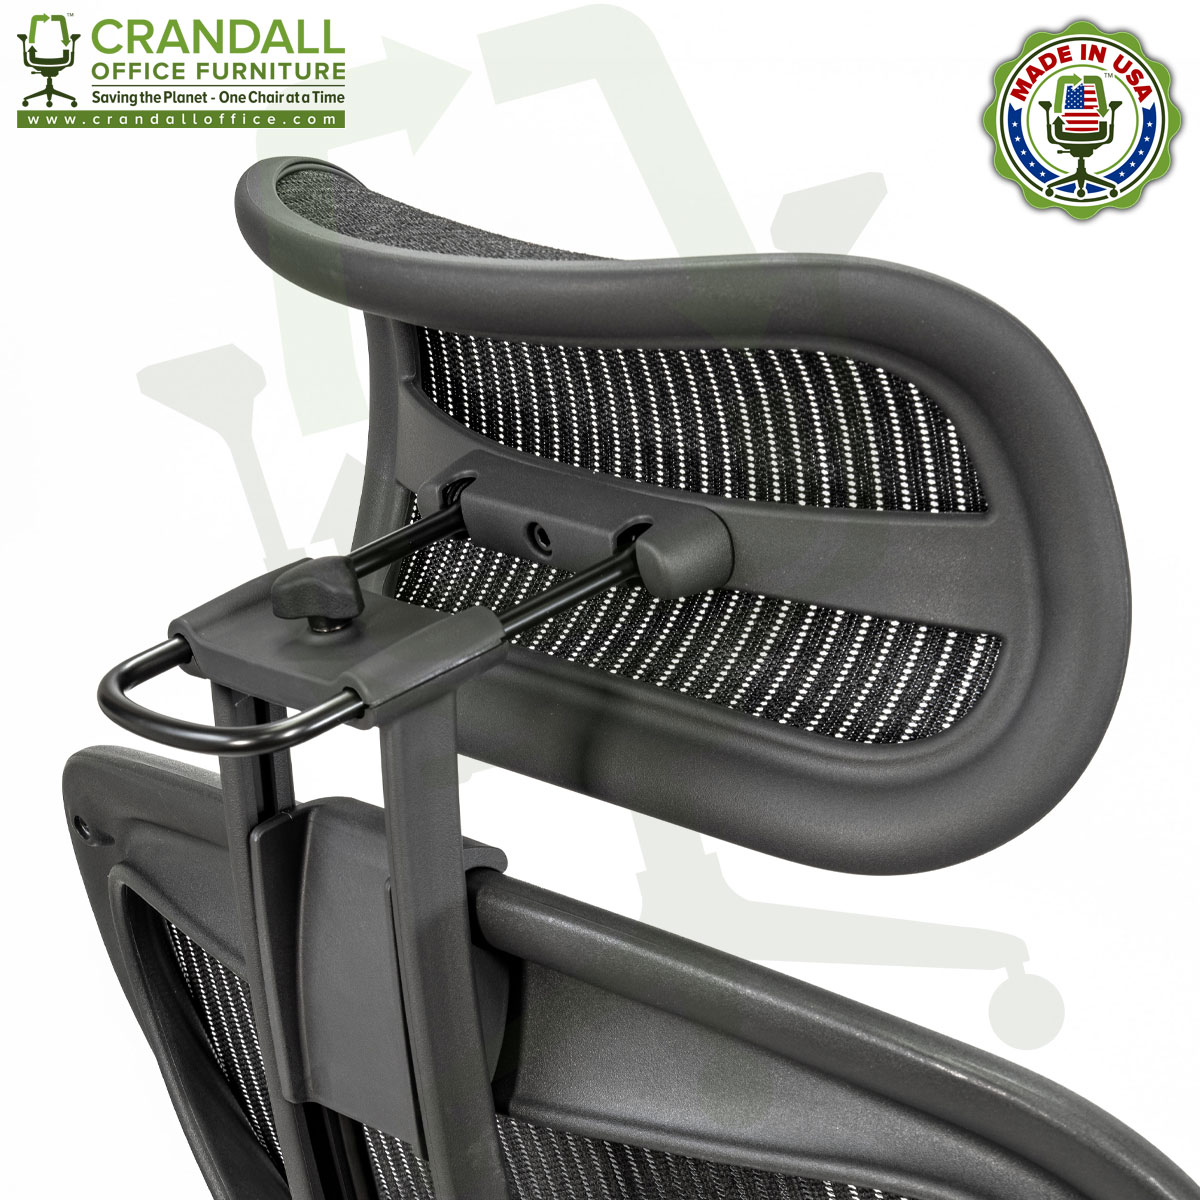 tilfældig Sparsommelig udsultet Atlas Suspension Headrest for Herman Miller Aeron Classic Chair - Crandall  Office Furniture